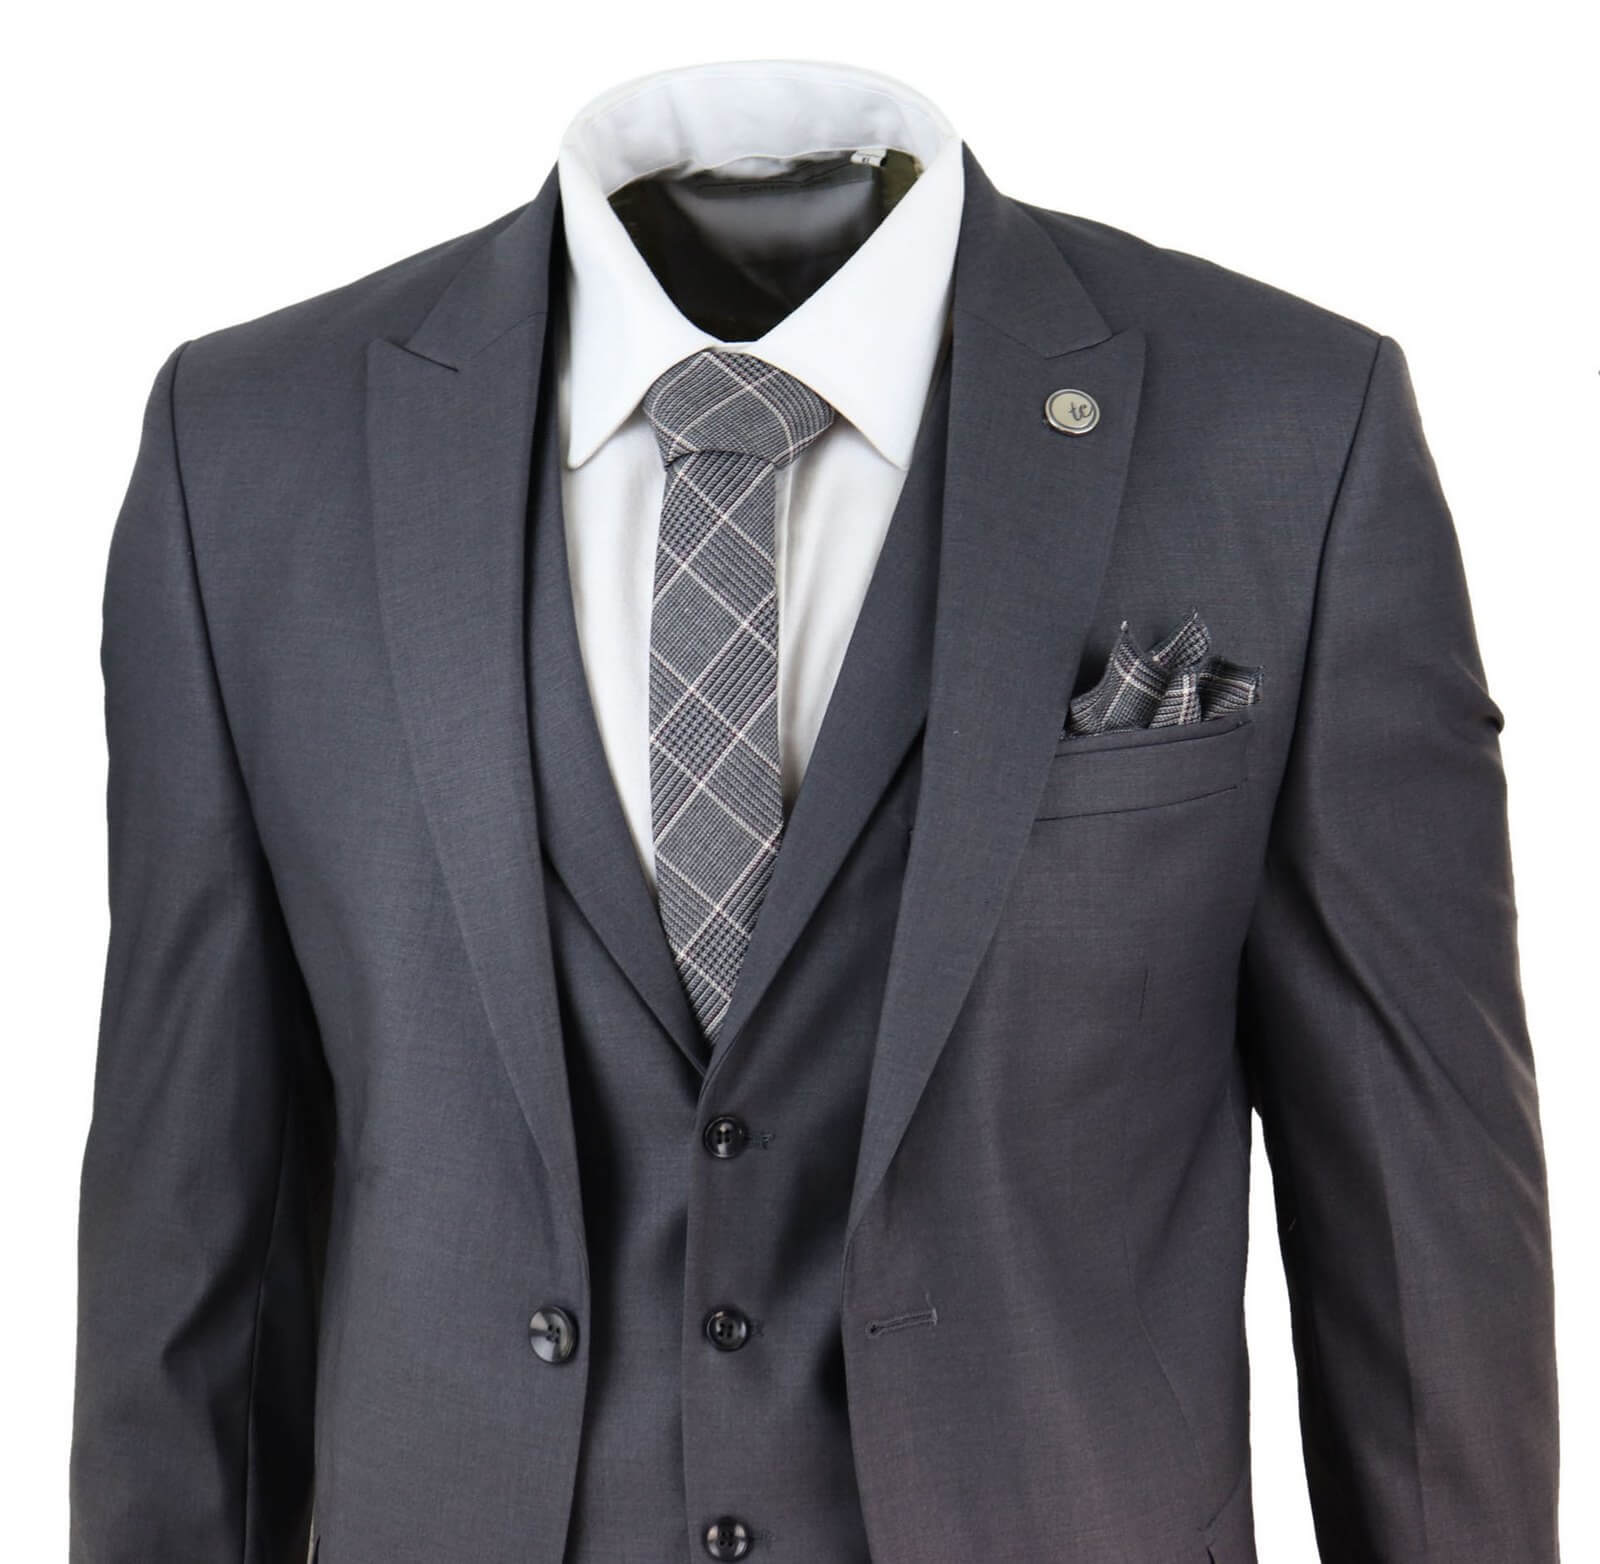 Buy Men Grey Textured Slim Fit Formal Two Piece Suit Online - 622144 |  Peter England